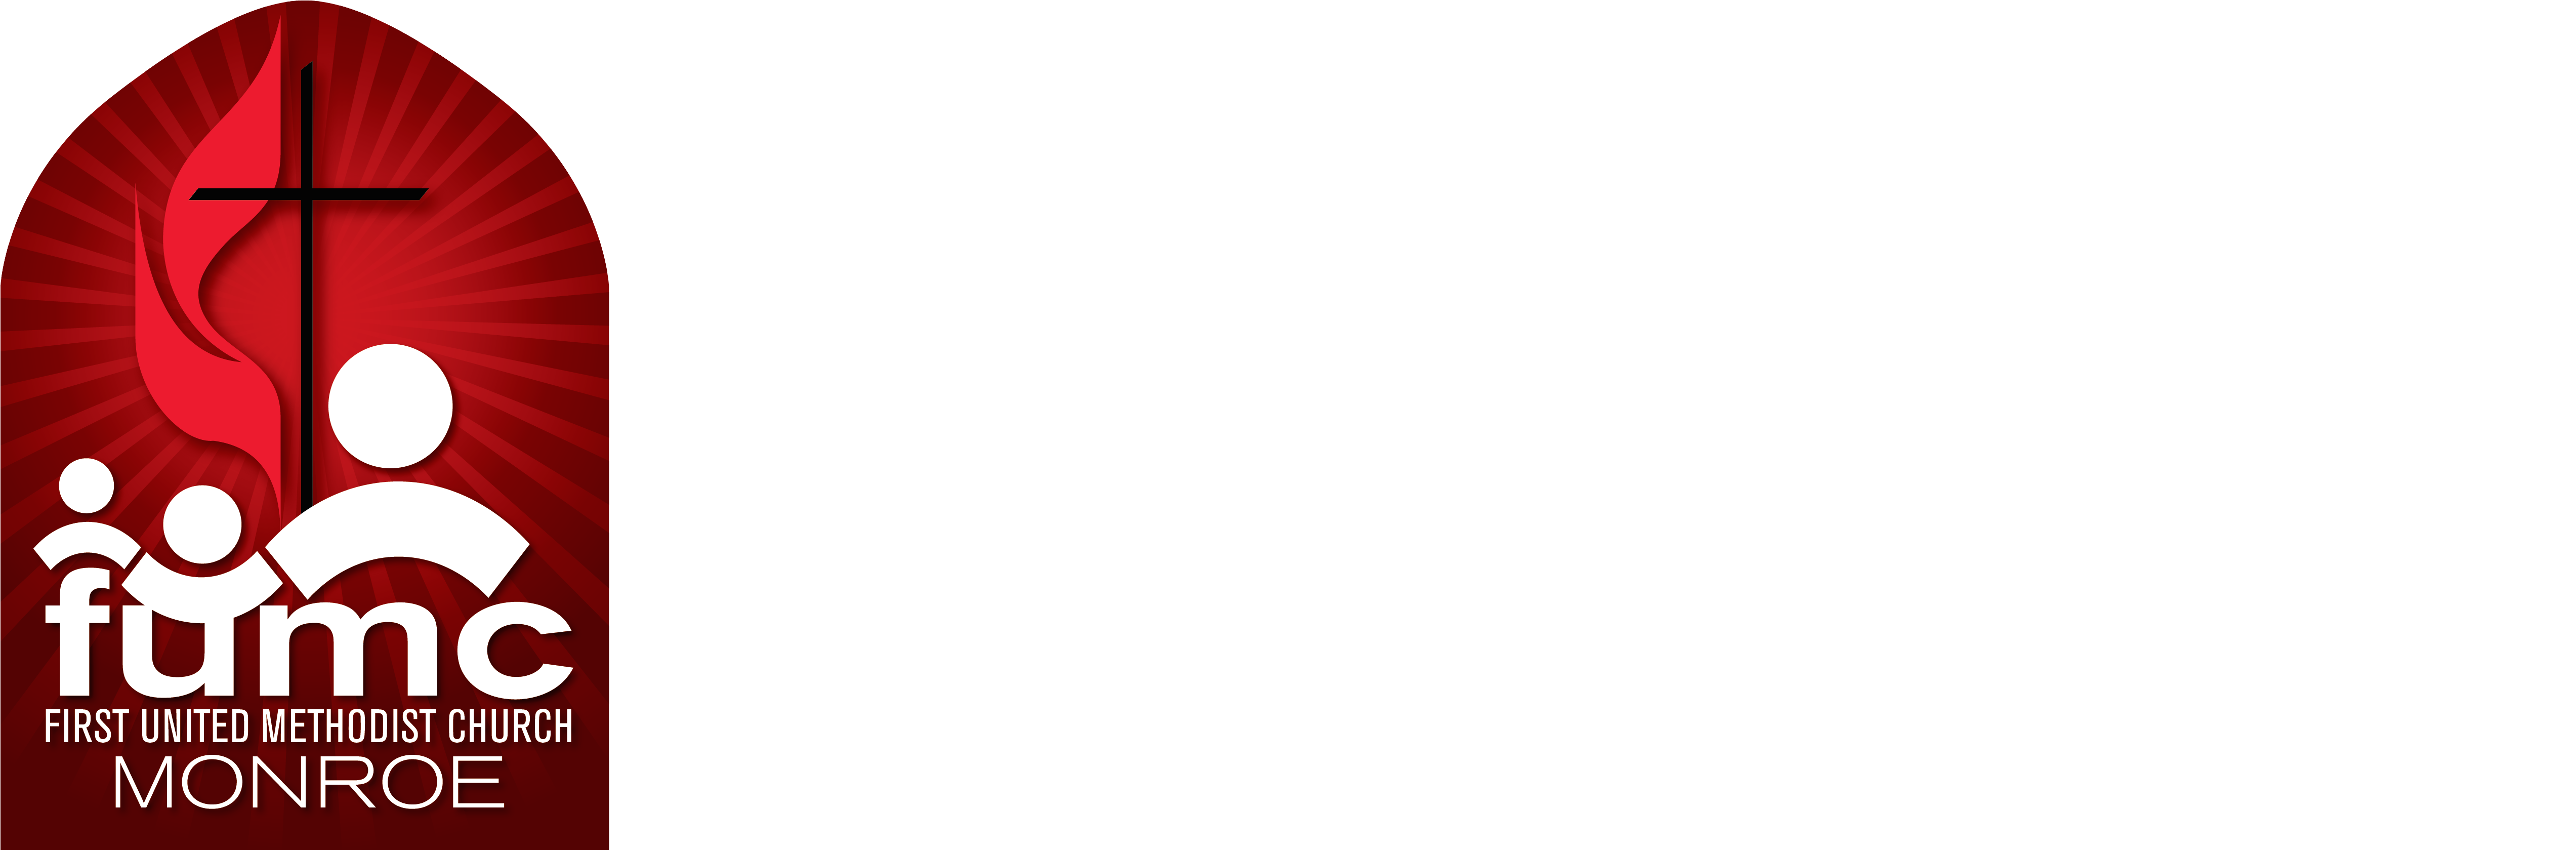 Logo - First United Methodist Church Monroe La (5096x1685)